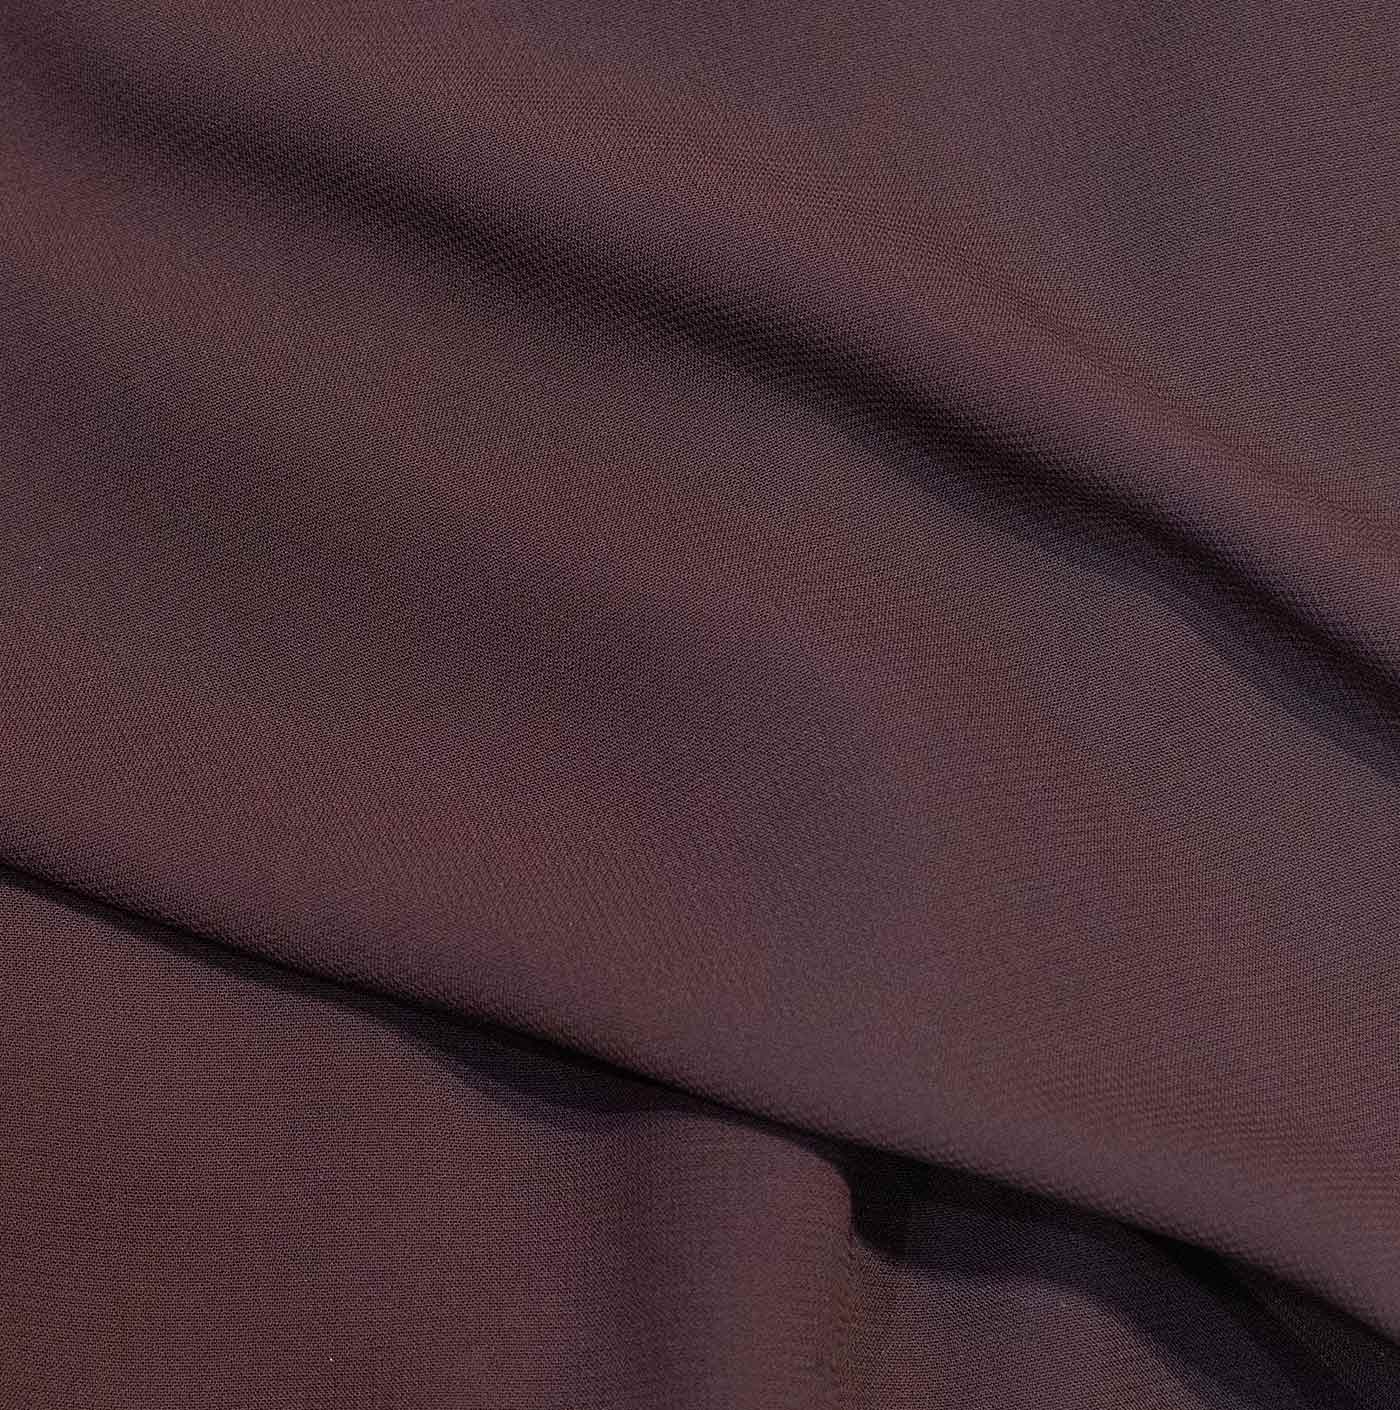 Brown Silk Chiffon Fabric